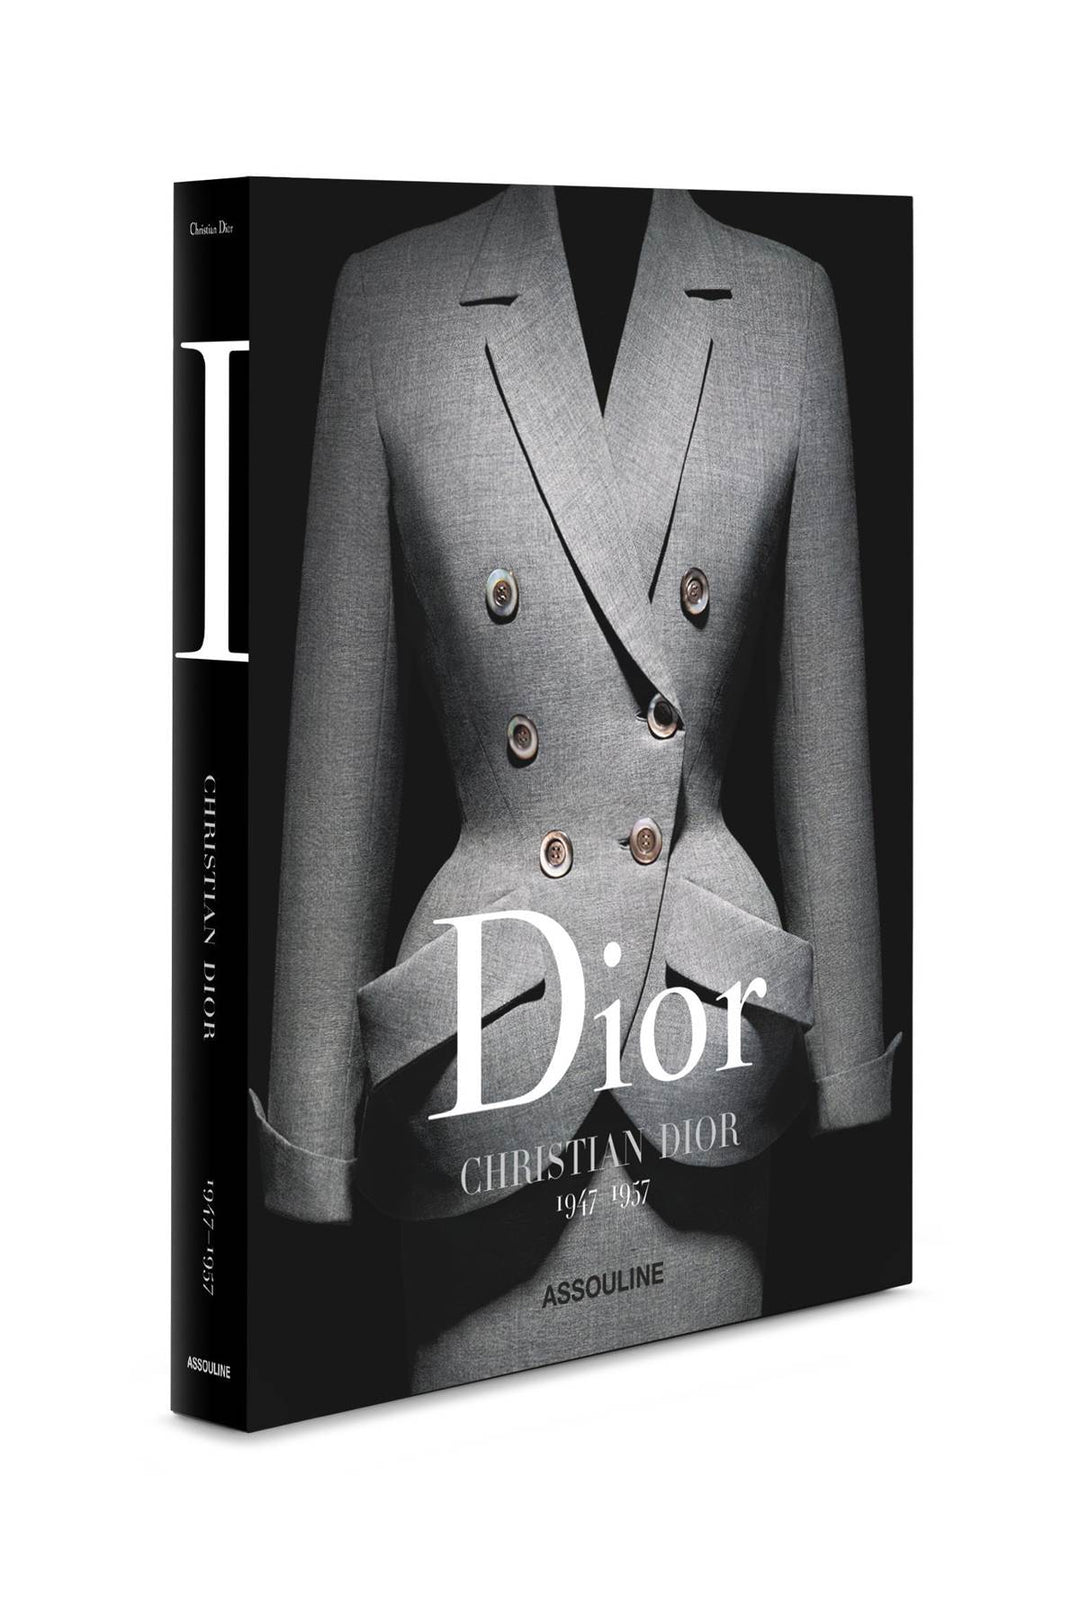 Dior By Christian Dior   1947 1957 - Assouline - CLT